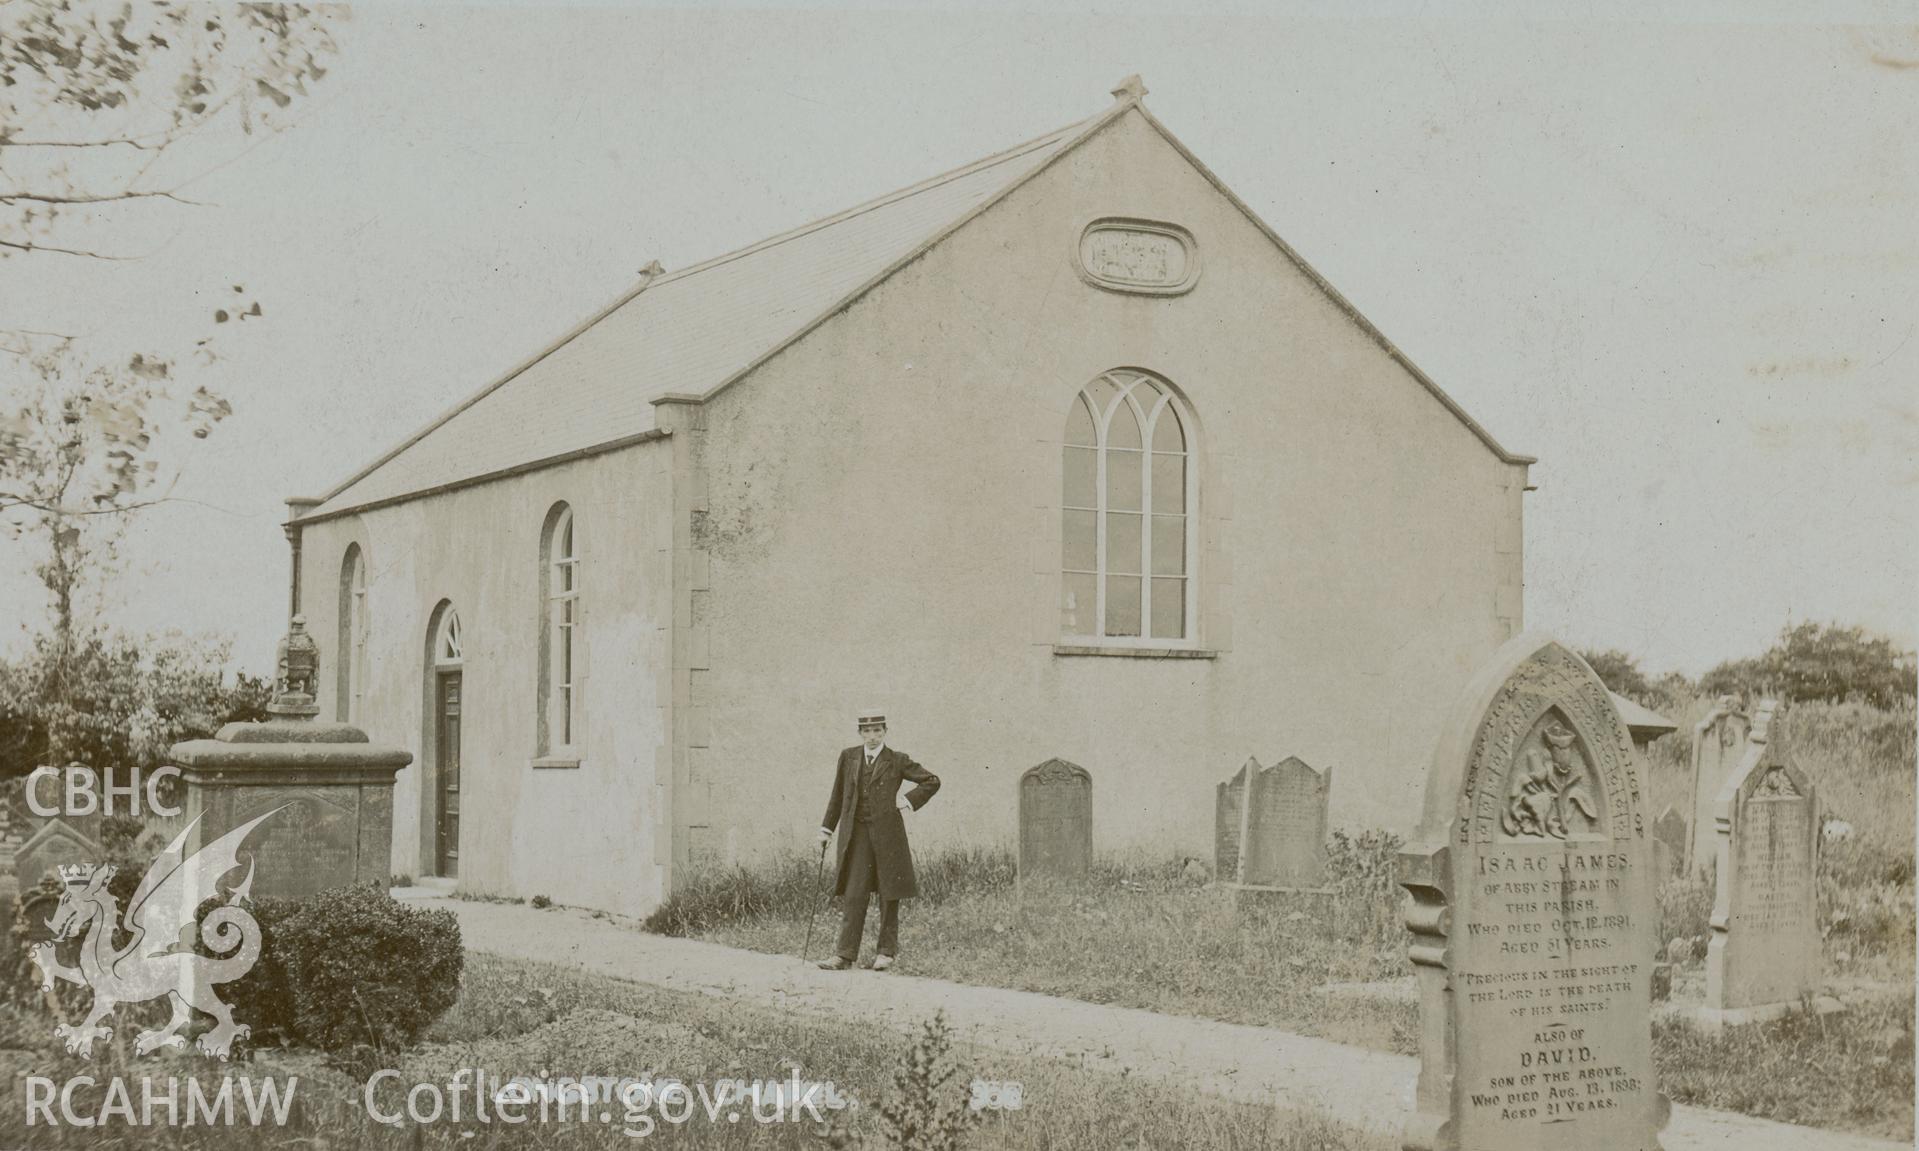 Digital copy of monochrome postcard showing exterior view of Longstone Congregational chapel, Longstone, Lampeter Velfrey. Photograph by W. John, Clynderwen, Pembrokeshire. Loaned for copying by Thomas Lloyd.